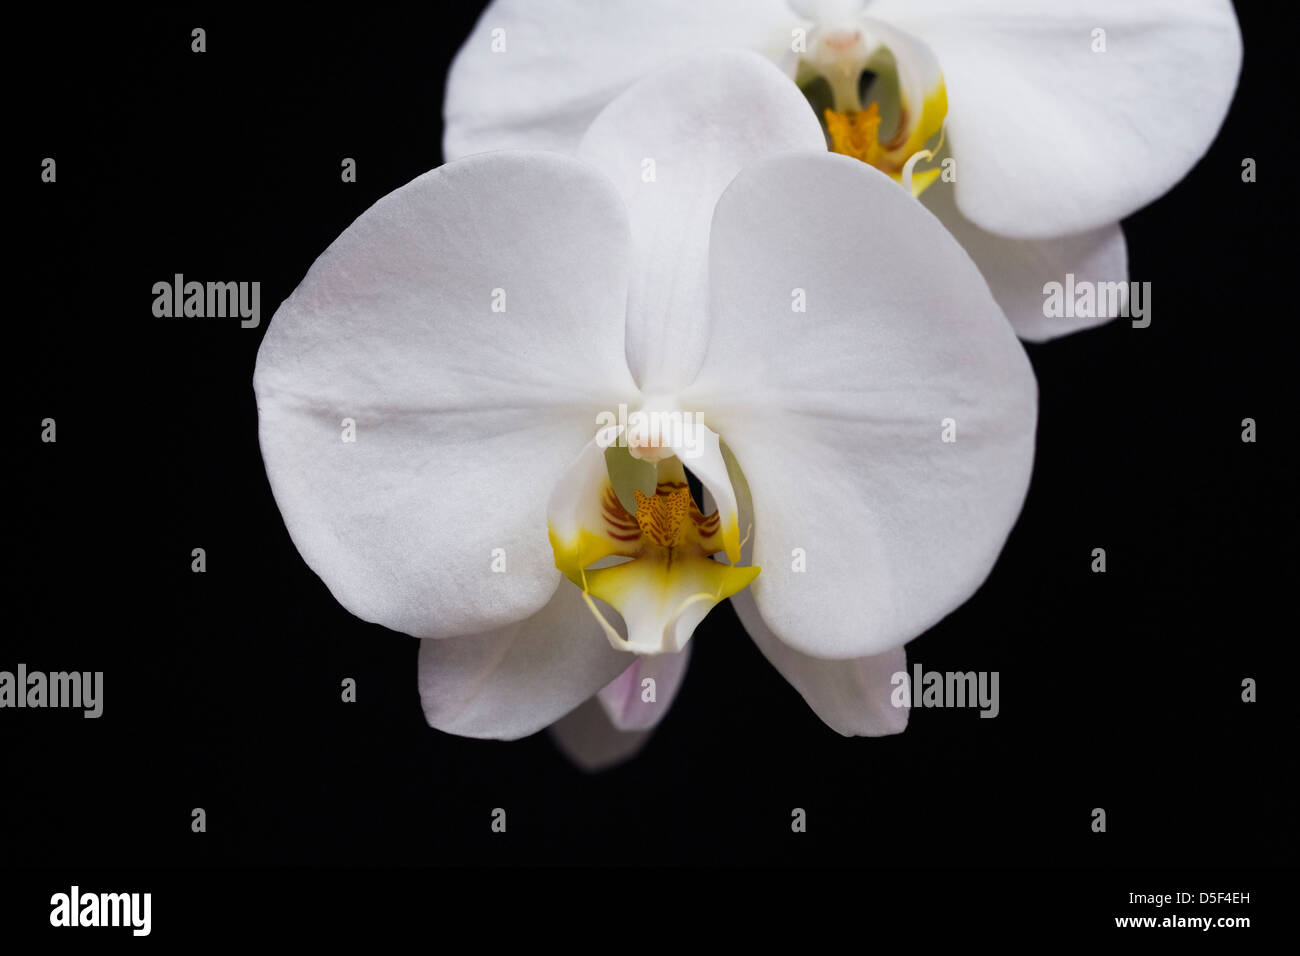 Phalaenopsis cultivar. Moth orchid flower. White flowers against a black background. Stock Photo